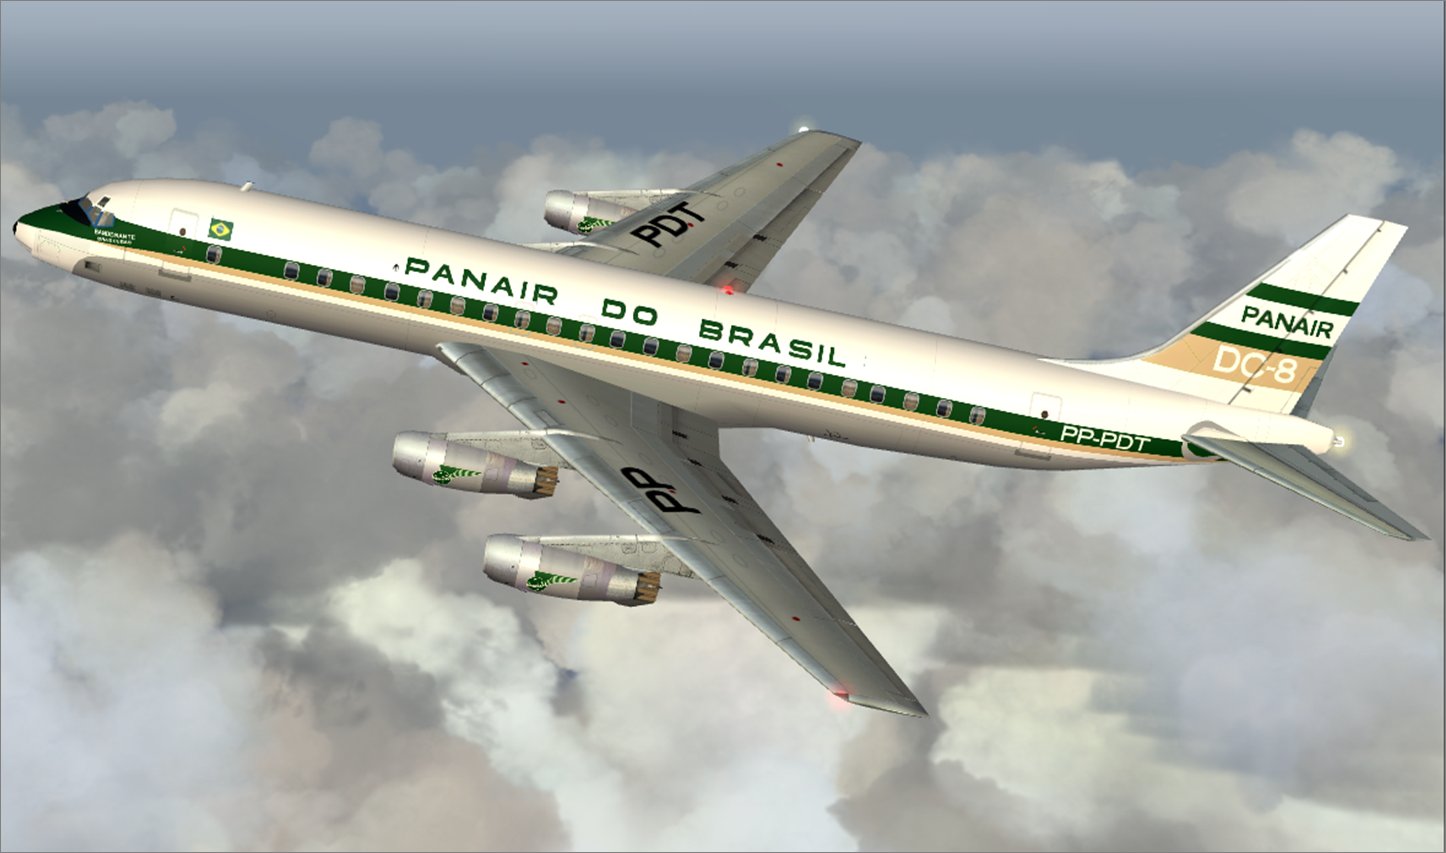 Panair Do Brasil